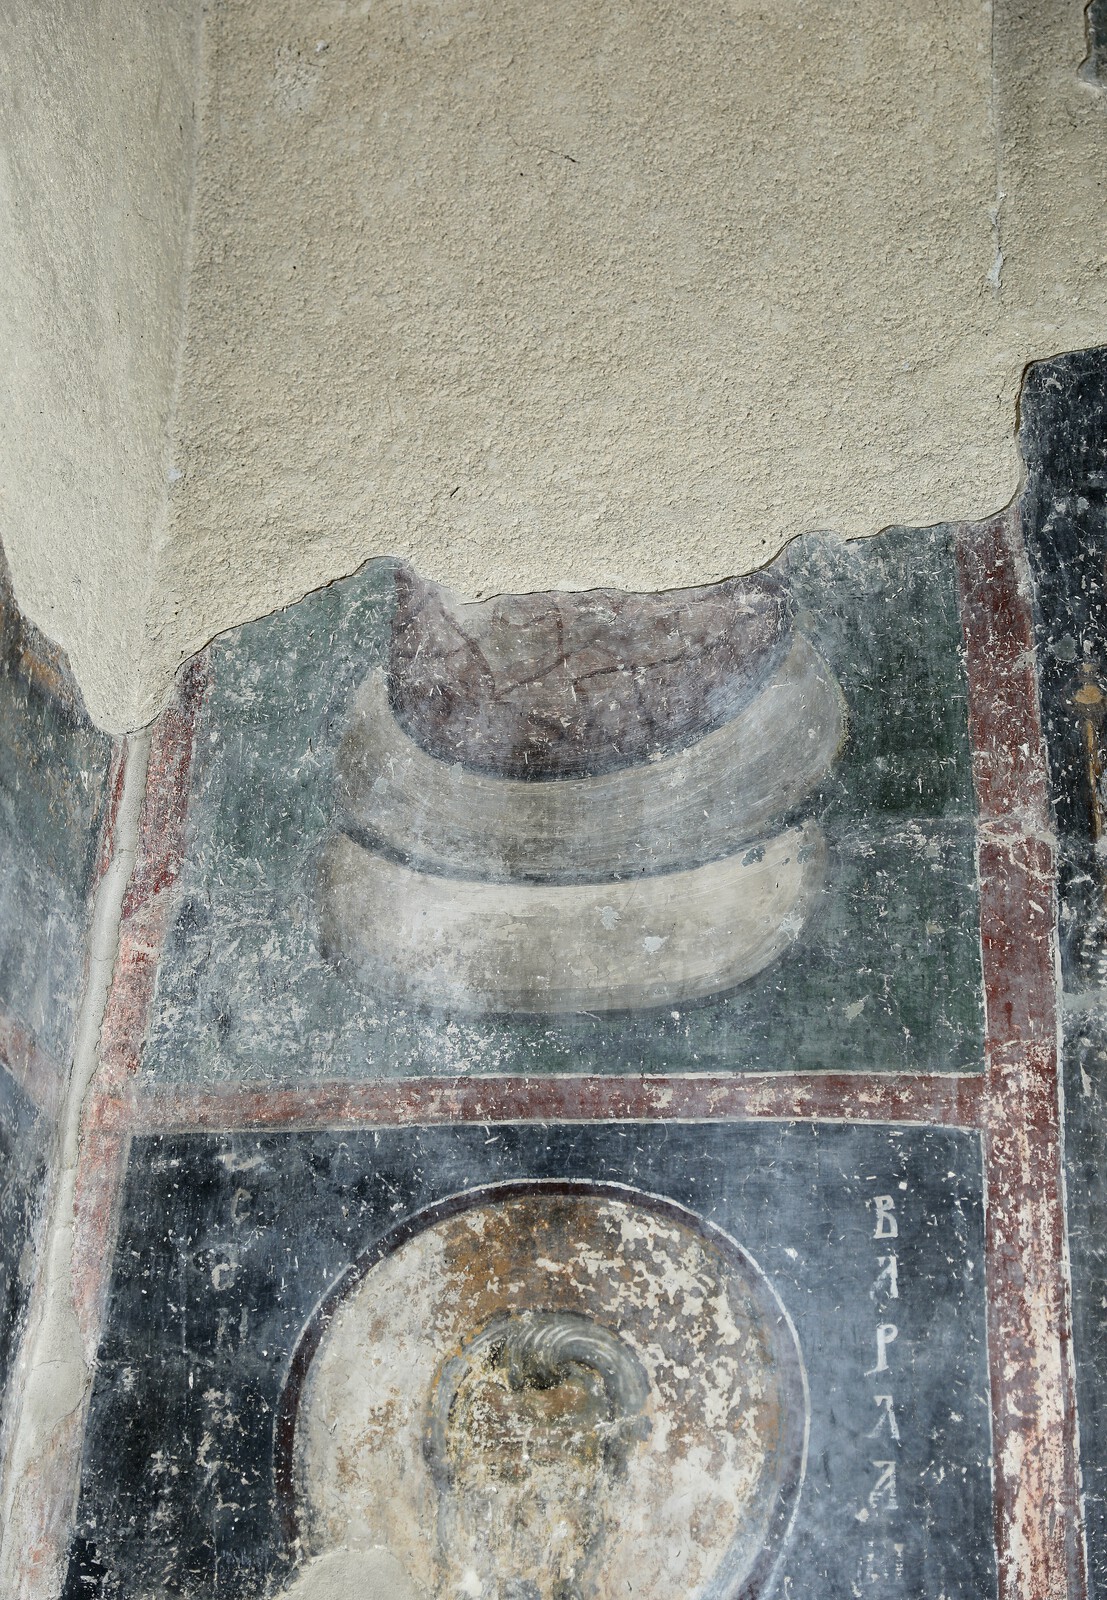 Pillar-saint, fragment of the column